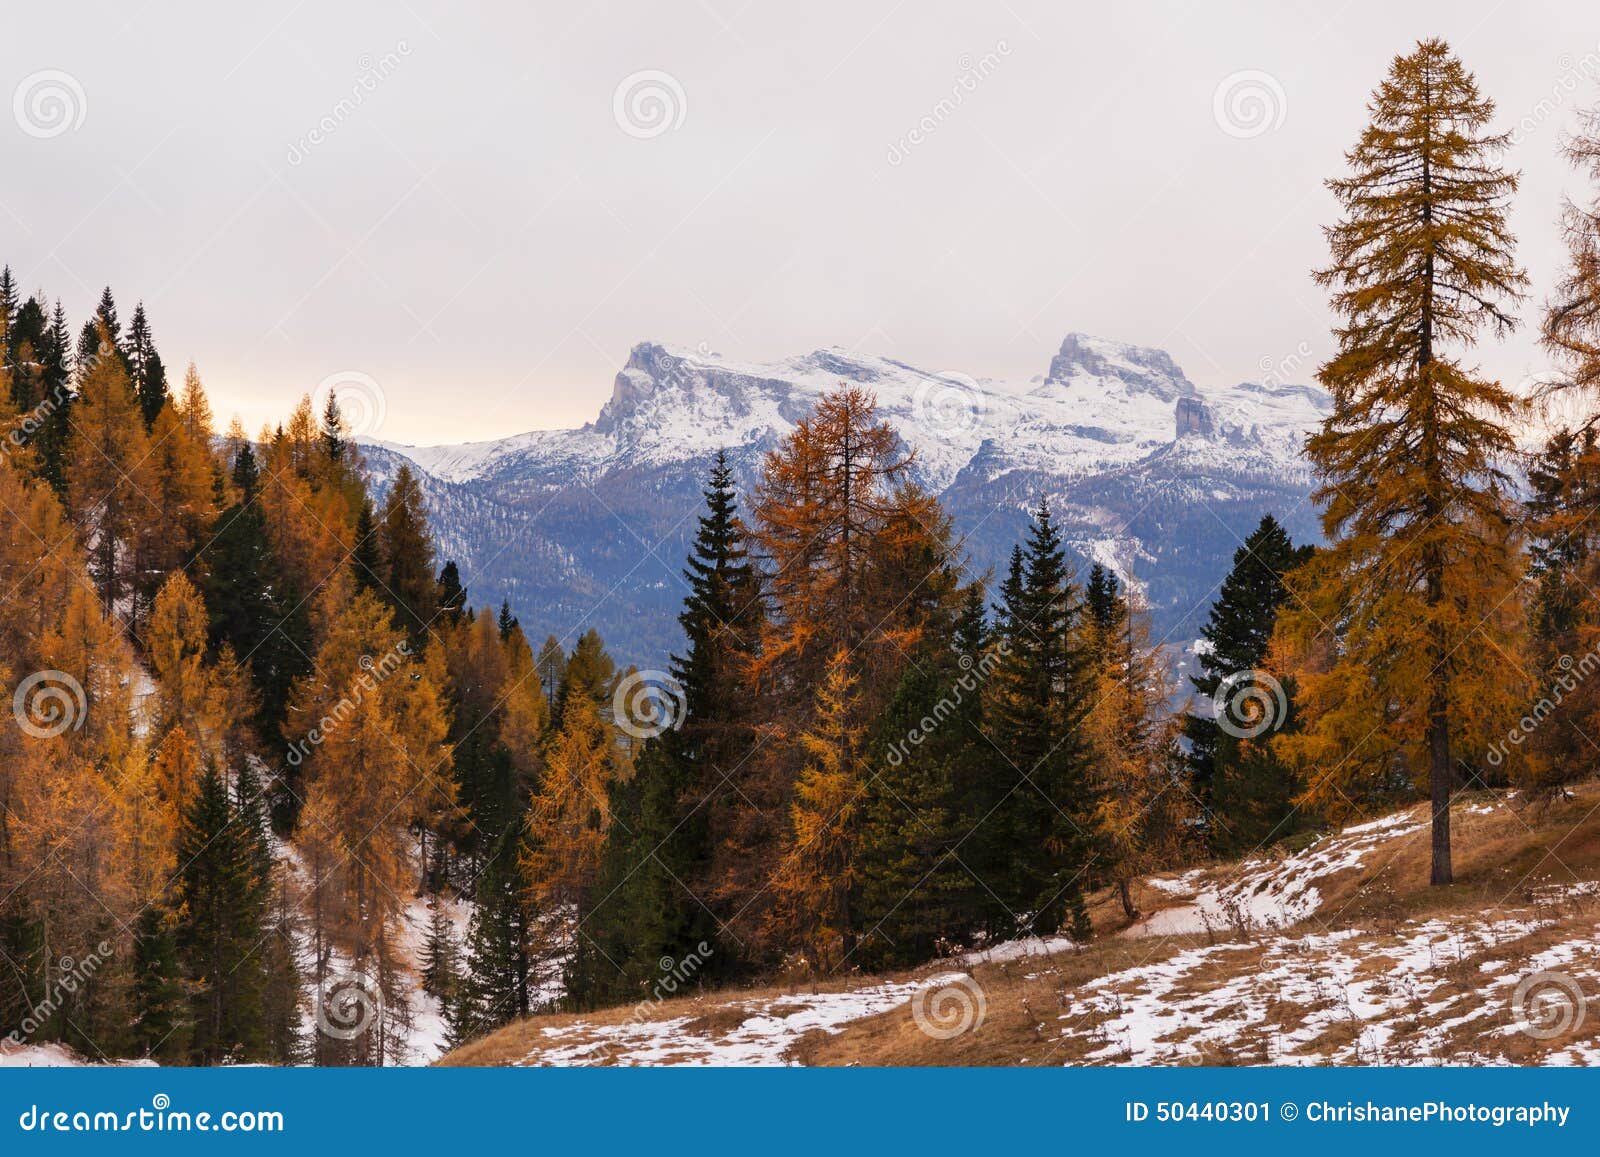 autumn in the mountains near cortina, italy